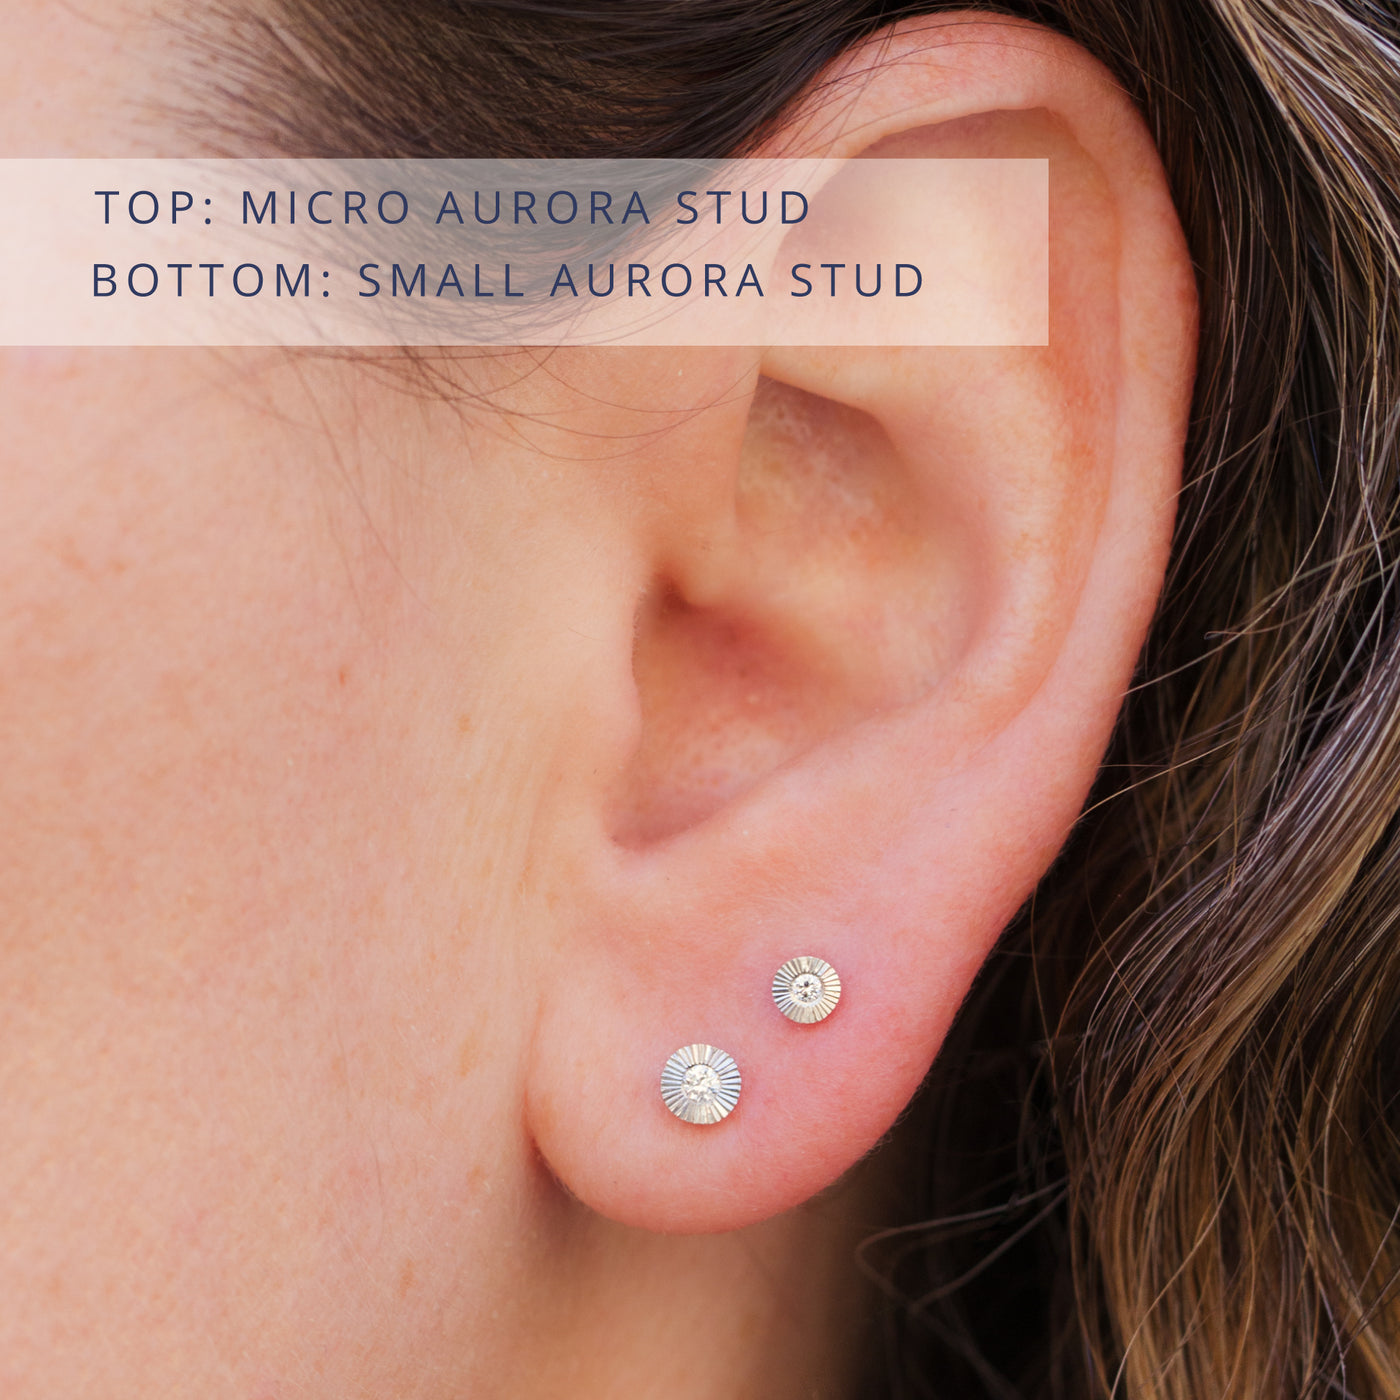 Aurora stud earrings on a model's ear. Top: sterling silver micro Aurora diamond studs, bottom: sterling silver Small Aurora diamond studs